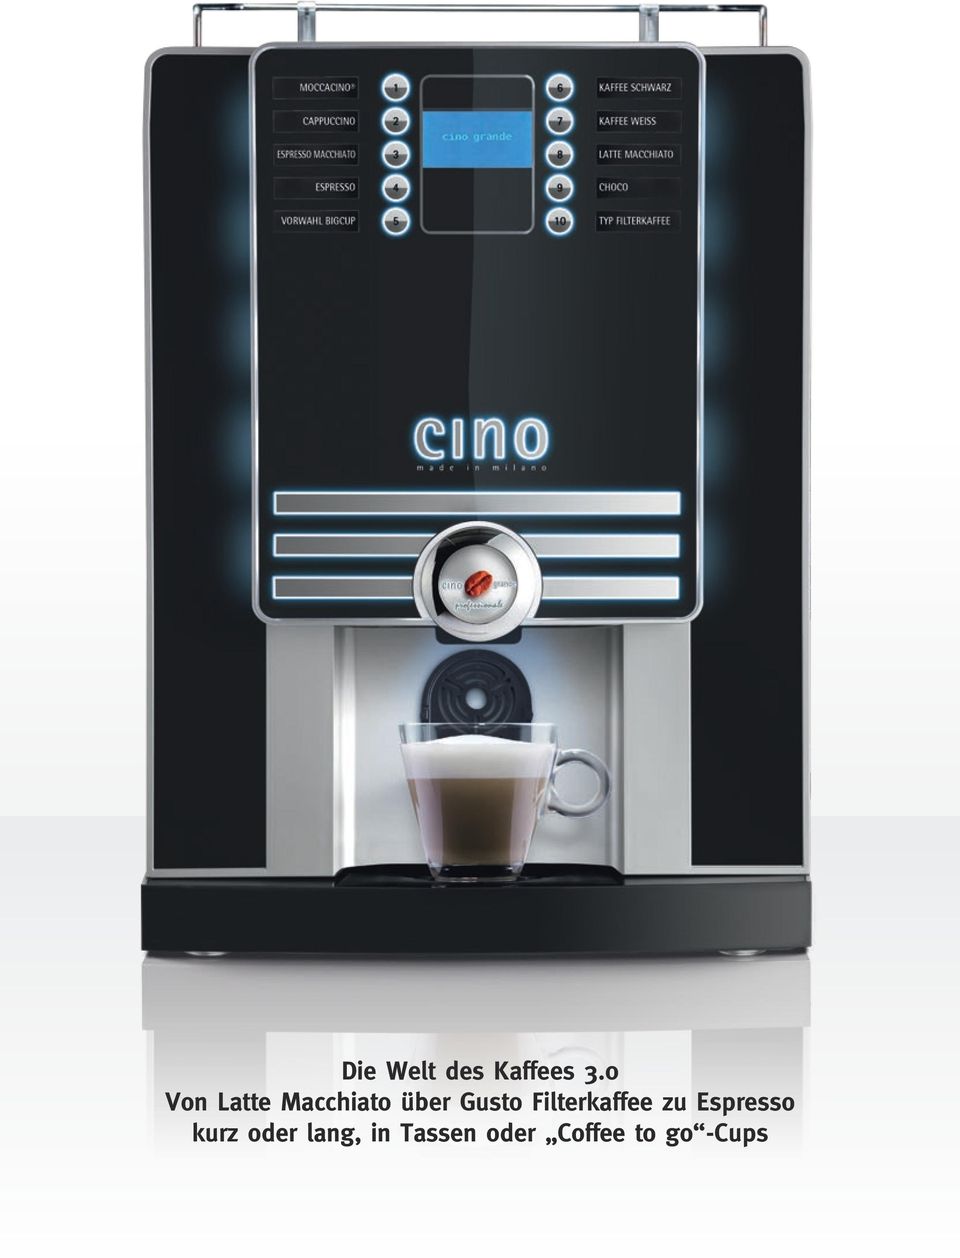 Filterkaffee zu Espresso kurz